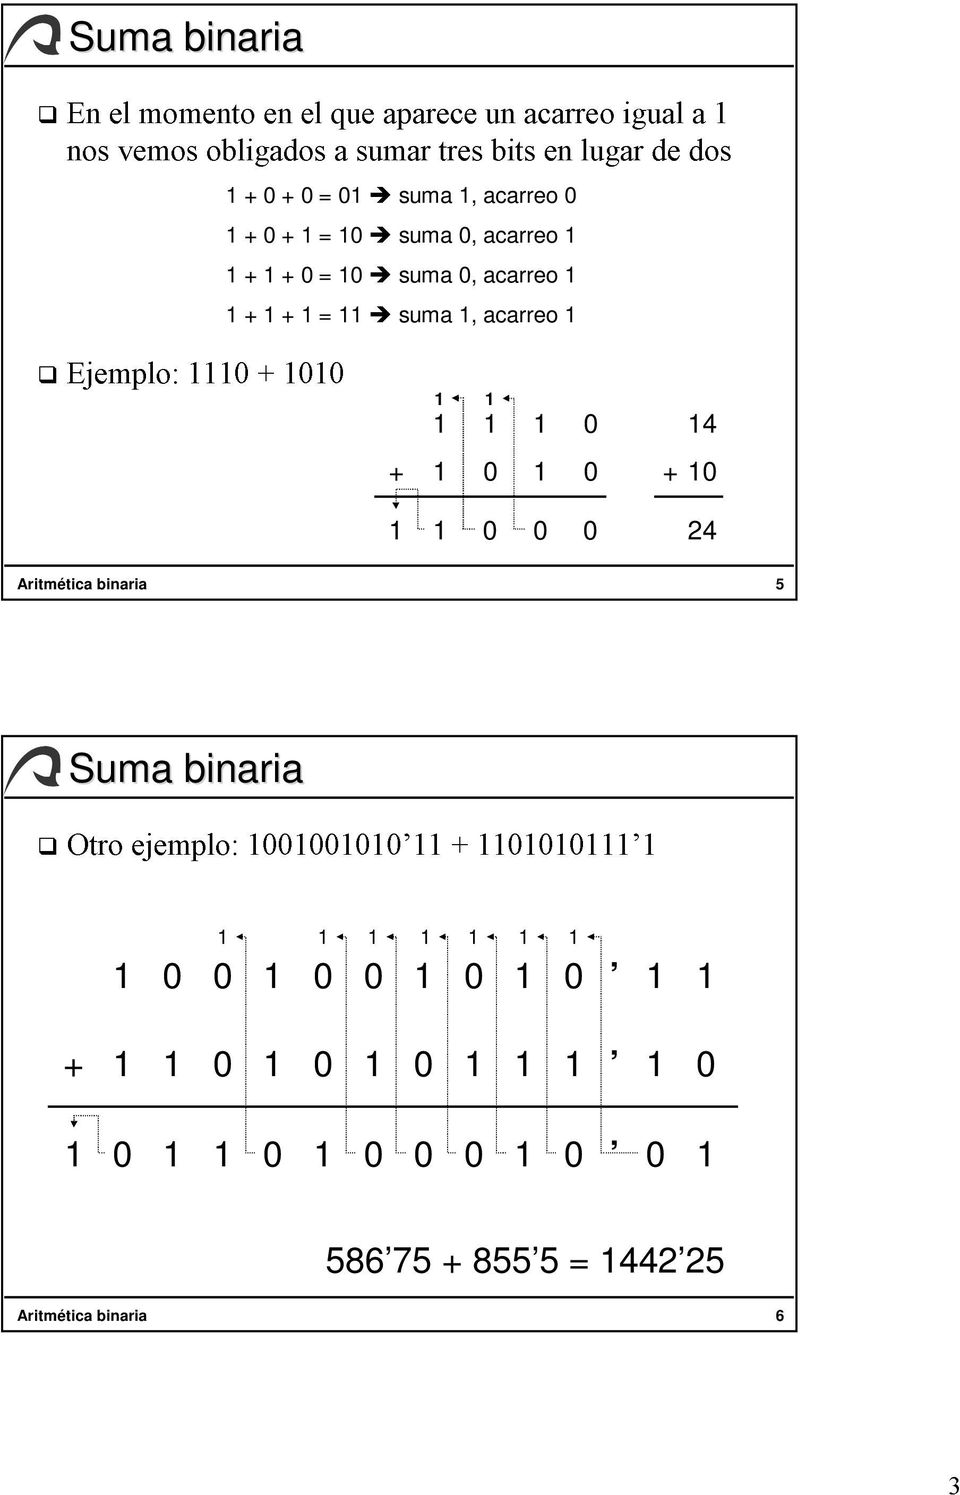 suma 0, acarreo + + = suma, acarreo 0 4 Otro ejemplo: 000000 + 000 + 0 0 + 0 0 0 0 24 Aritmética